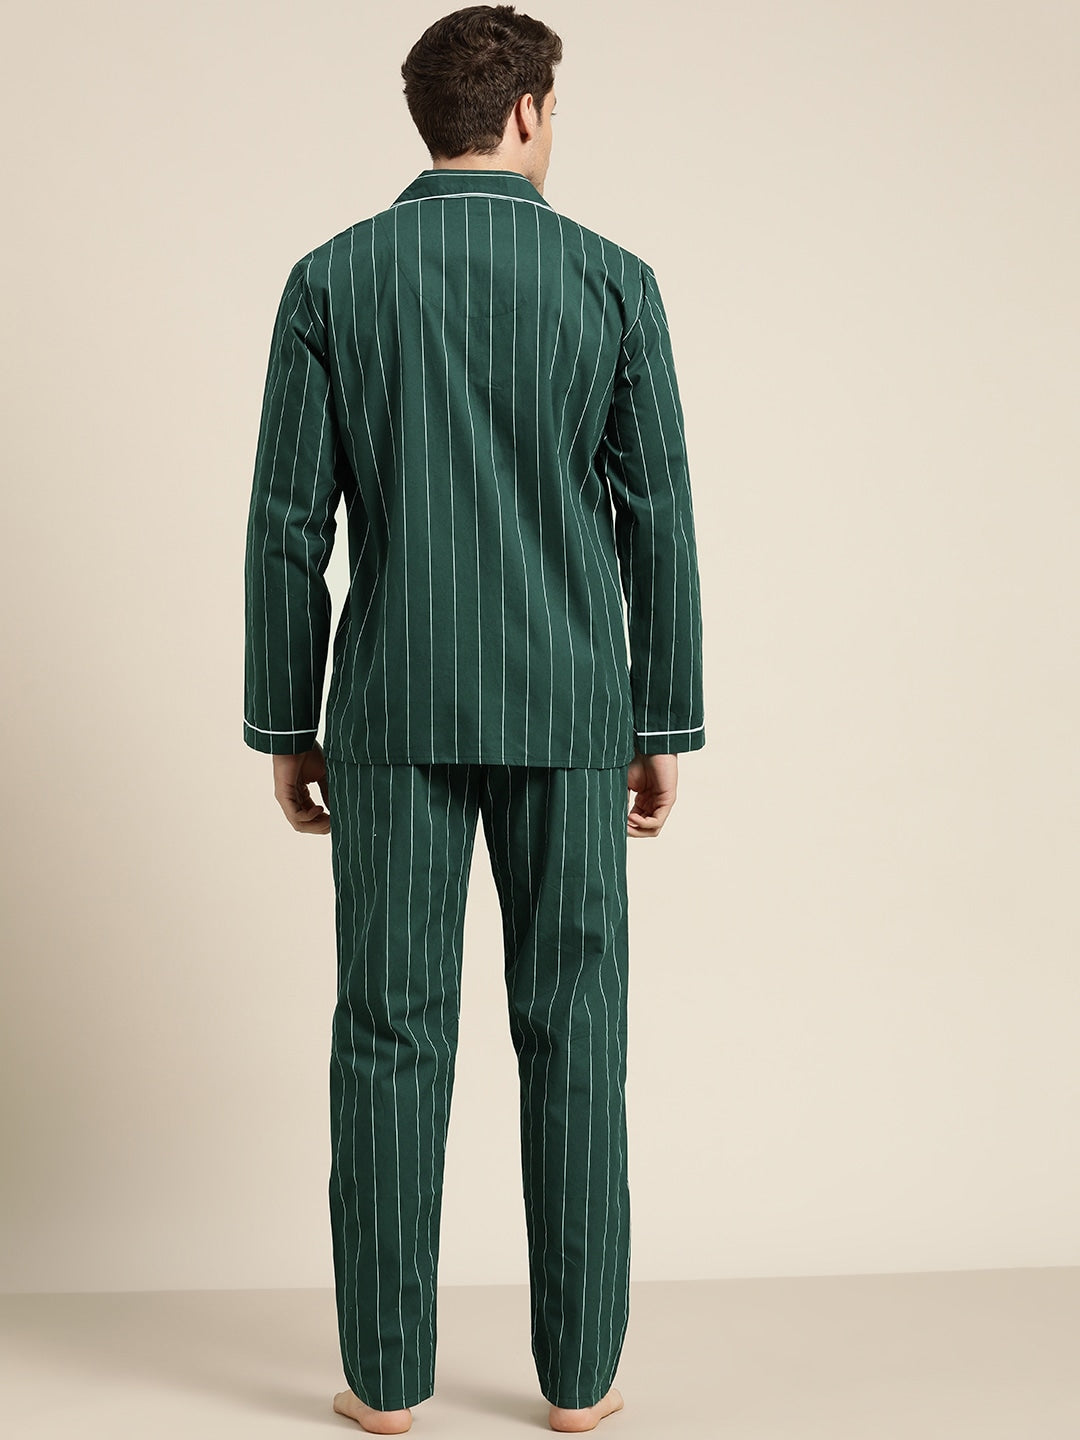 Buy LUXURAZI Millennial Man's Bottle Green Two-Piece Suit Set at Amazon.in